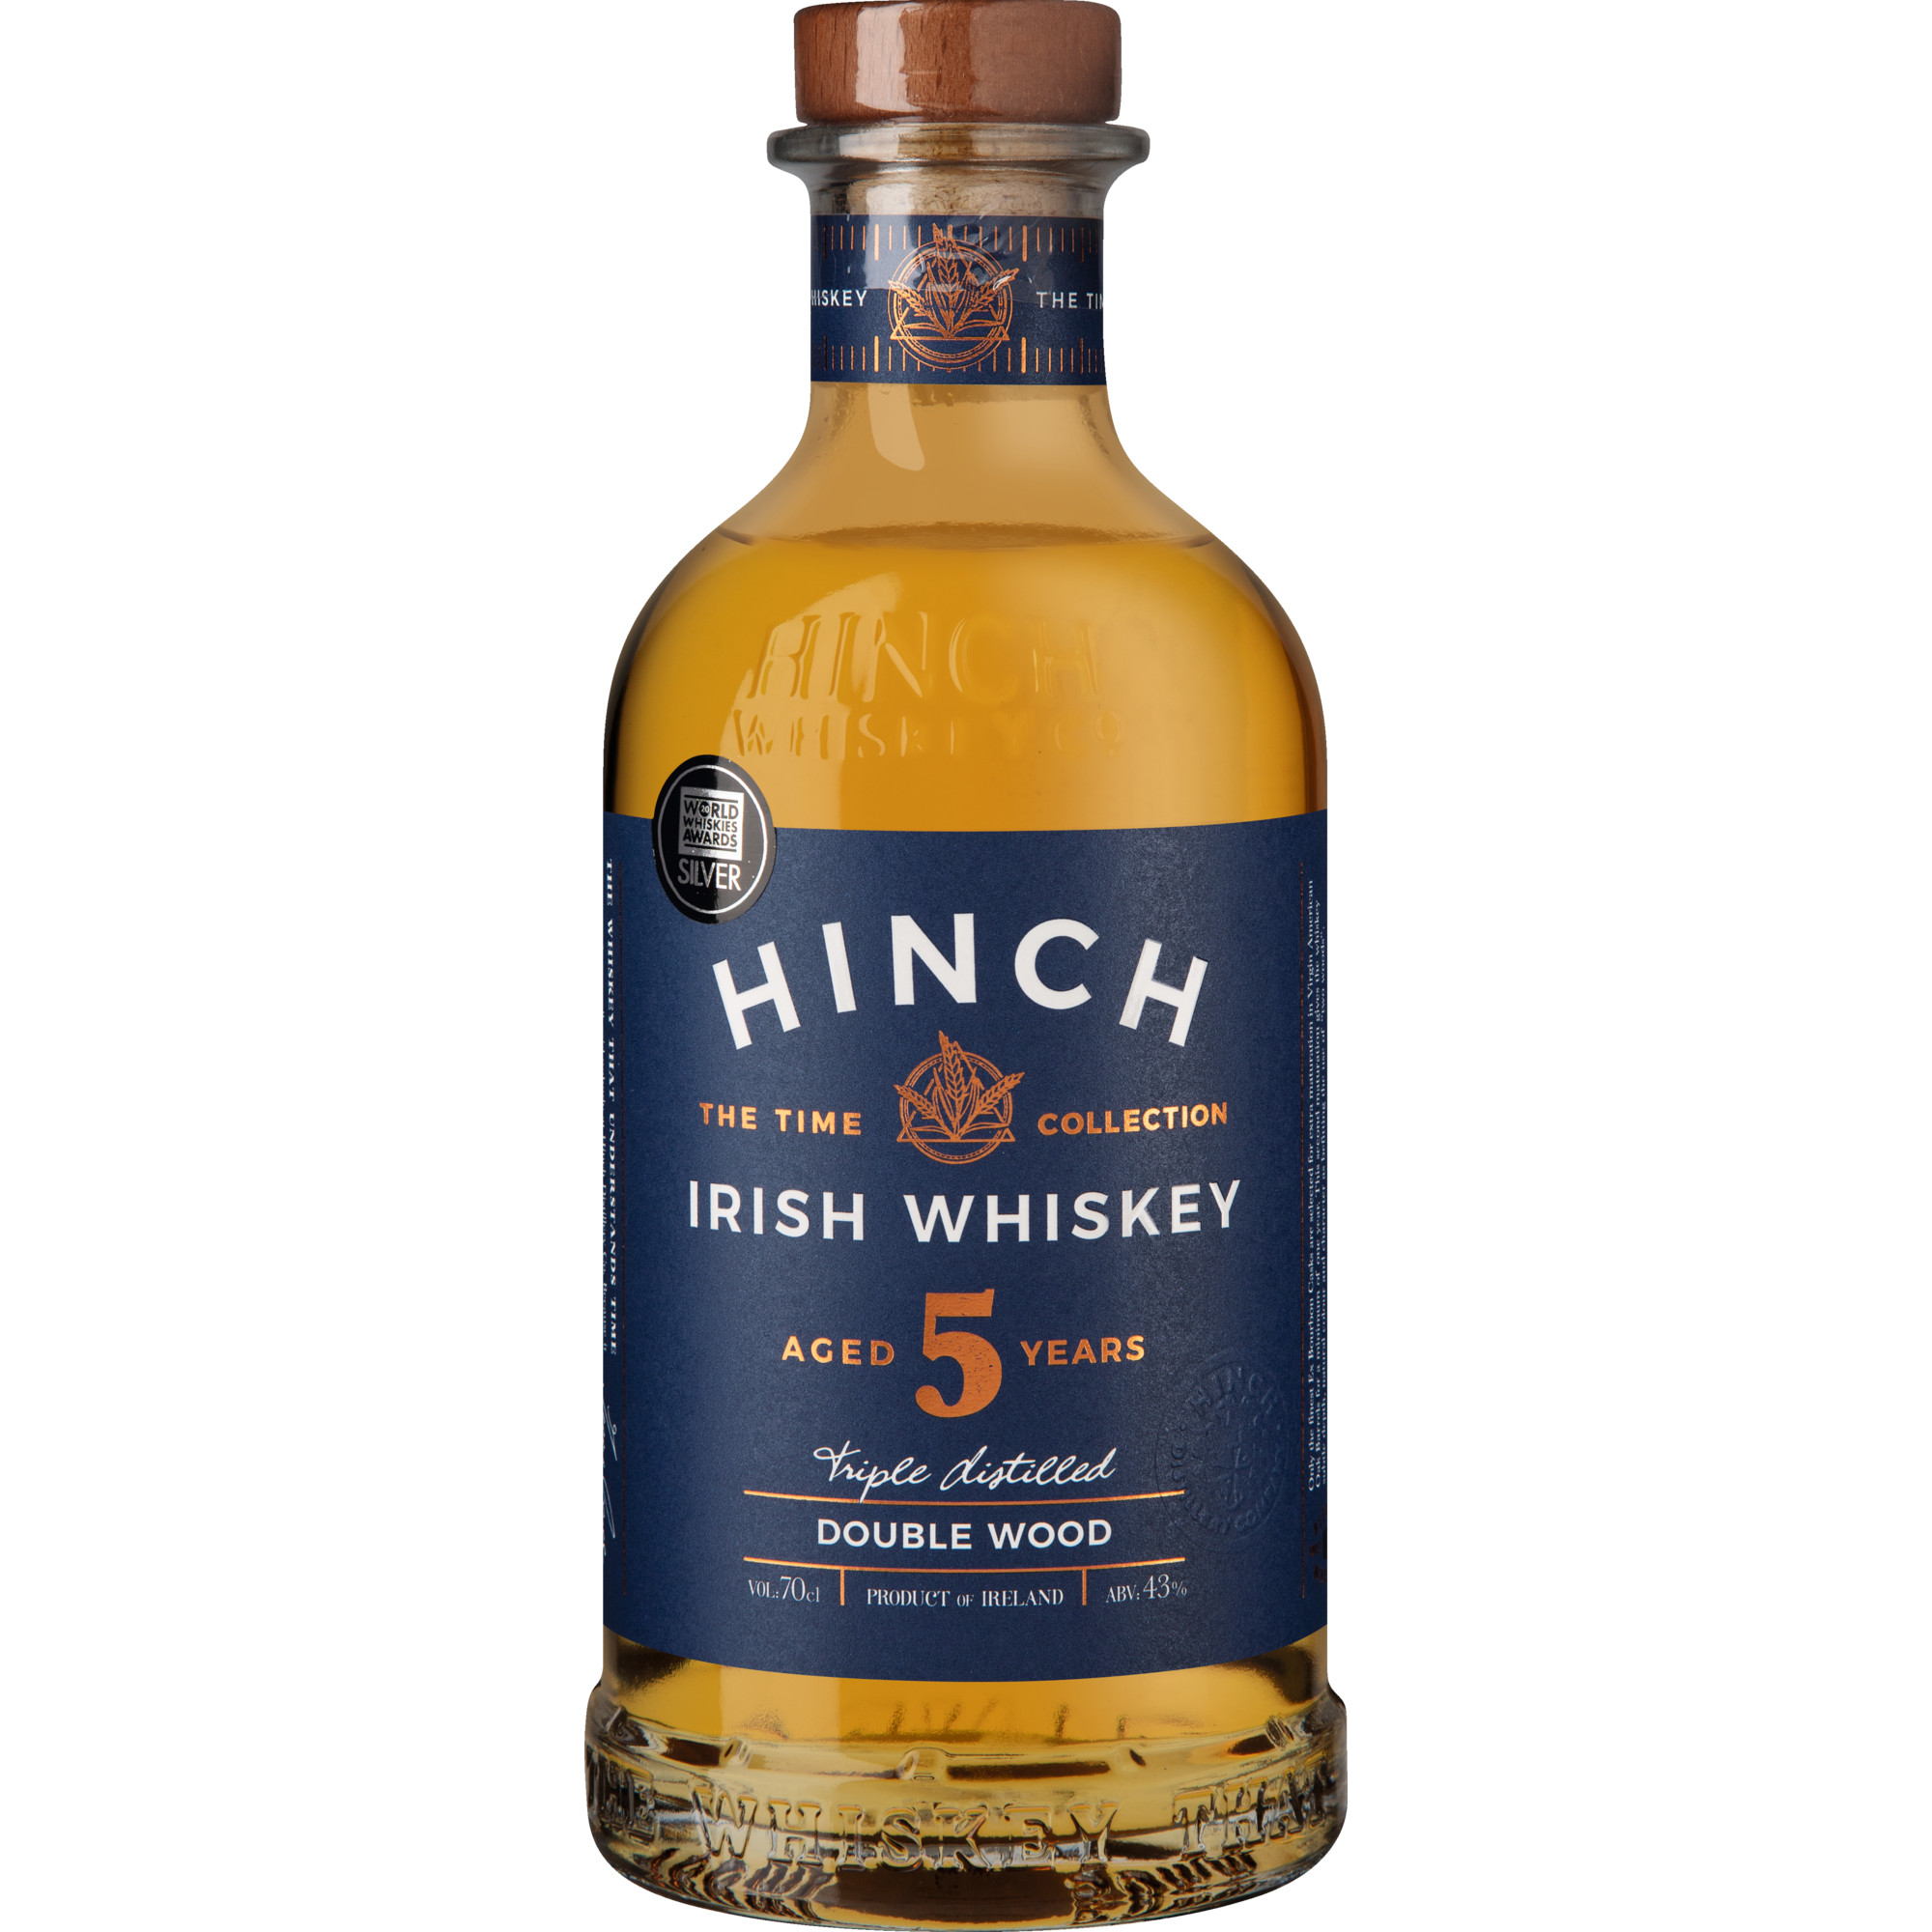 Hinch Double Wood 5 Years, Irish Whiskey, Irland, 0,7 L, 43 Vol., Spirituosen Hinch Distillery Ltd. 19 Carryduff Road BT27 6TZ N Ireland Hawesko DE